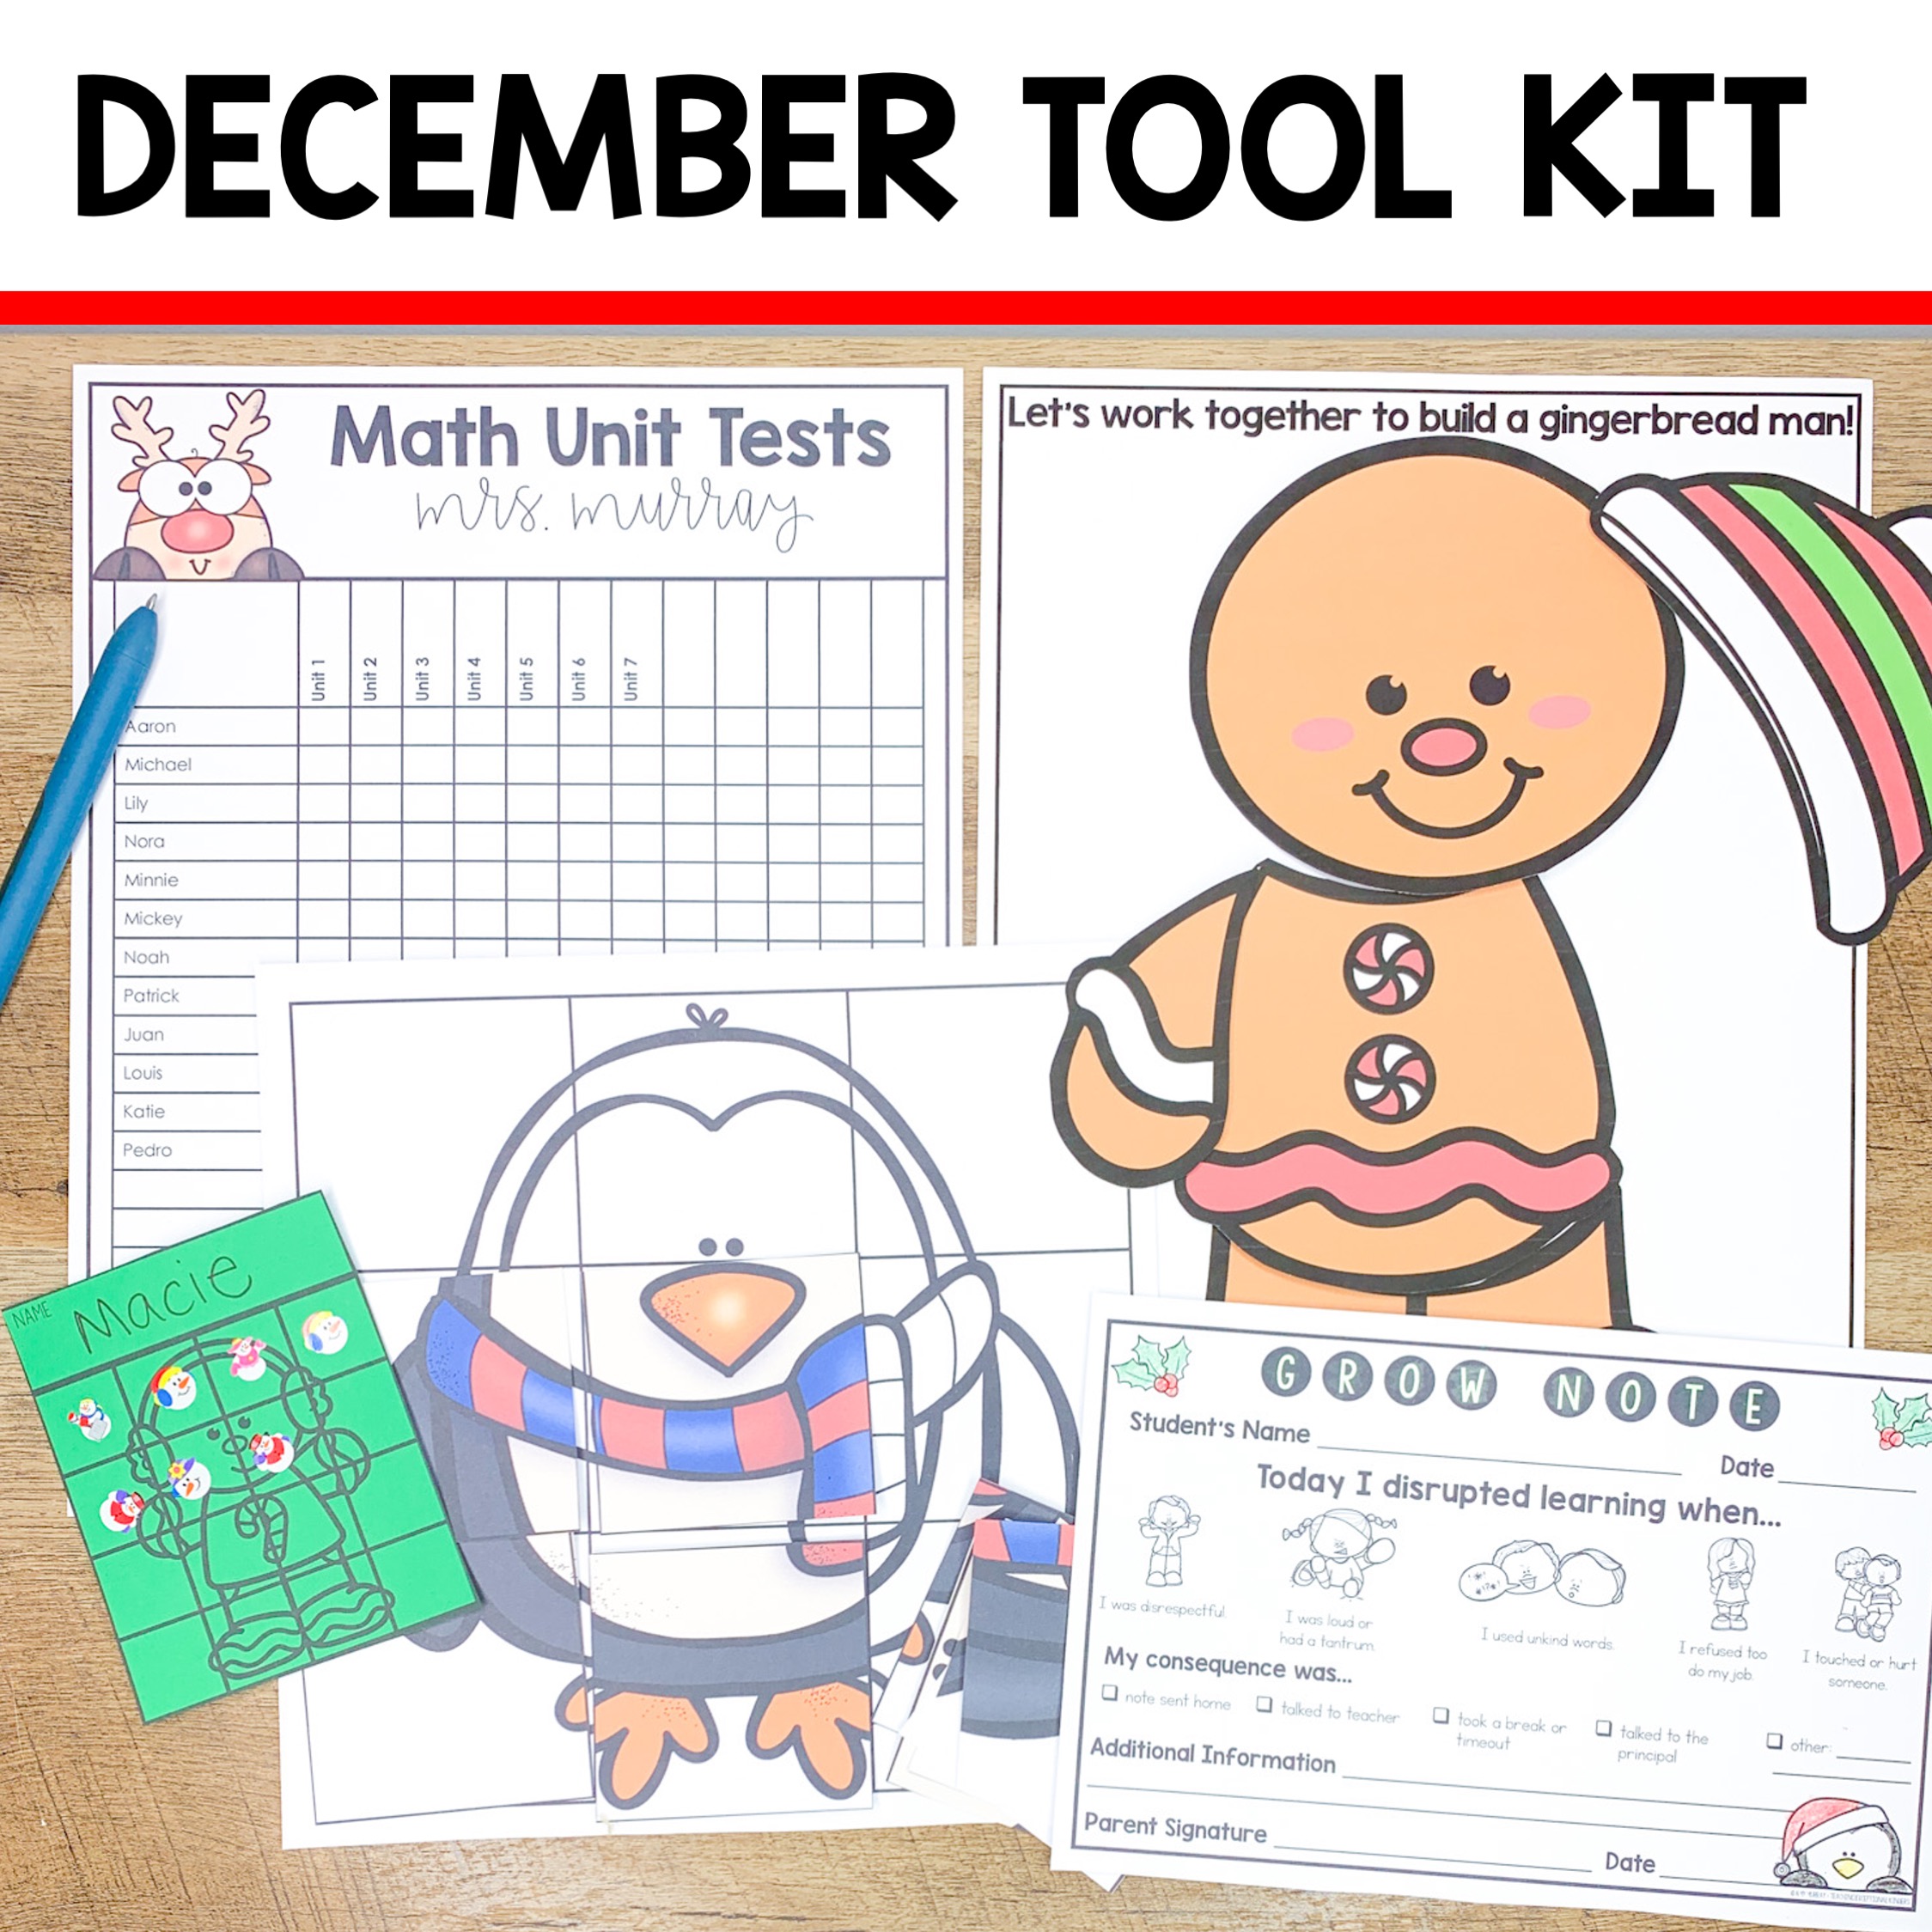 December Tool Kit